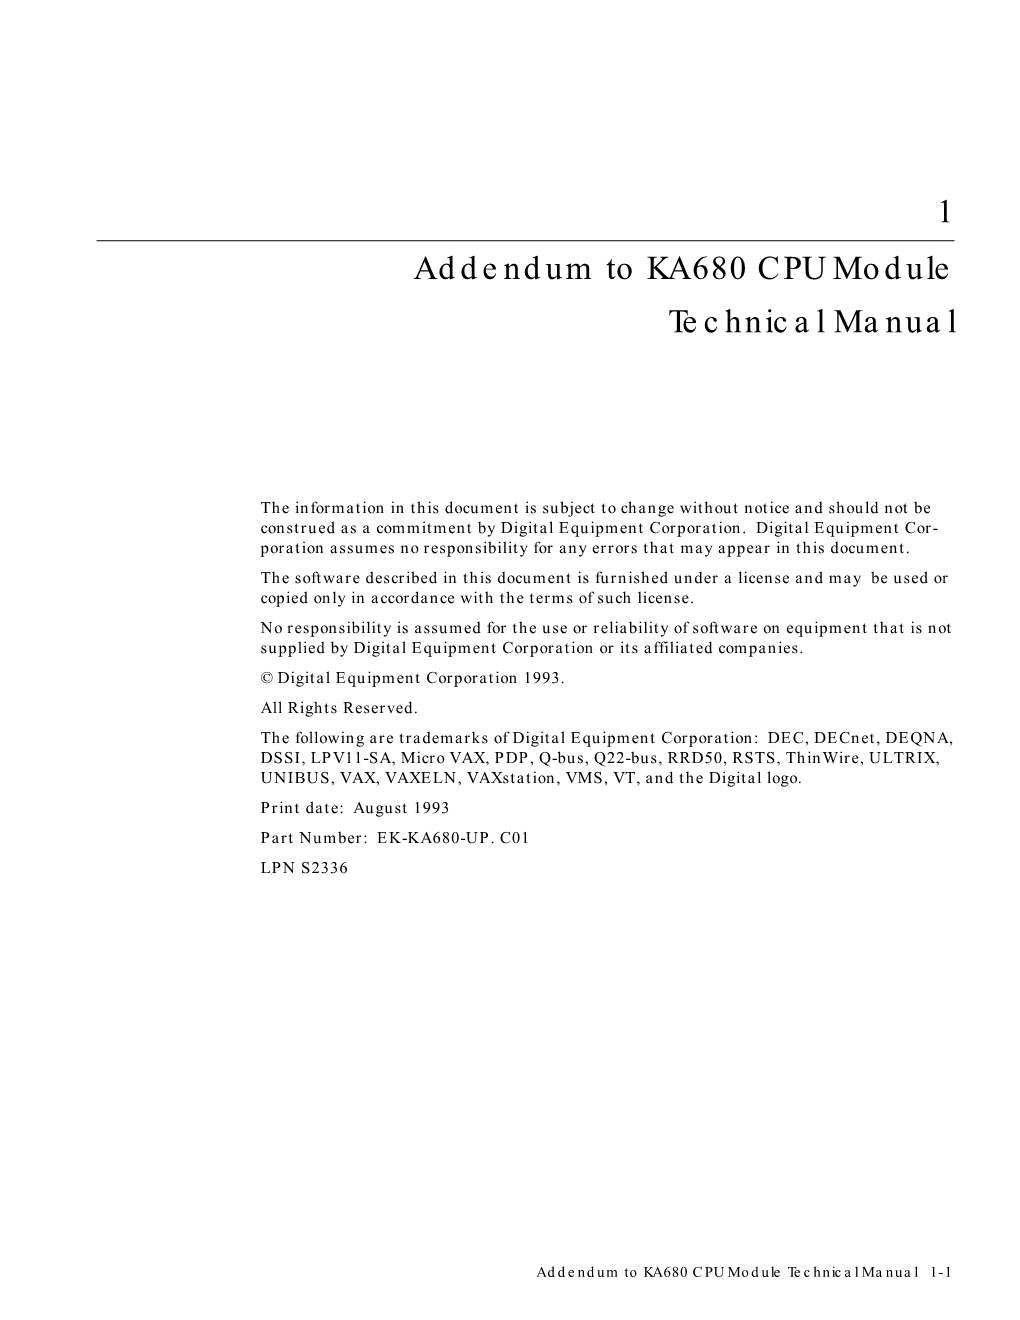 Addendum to KA680 CPU Module Technical Manual